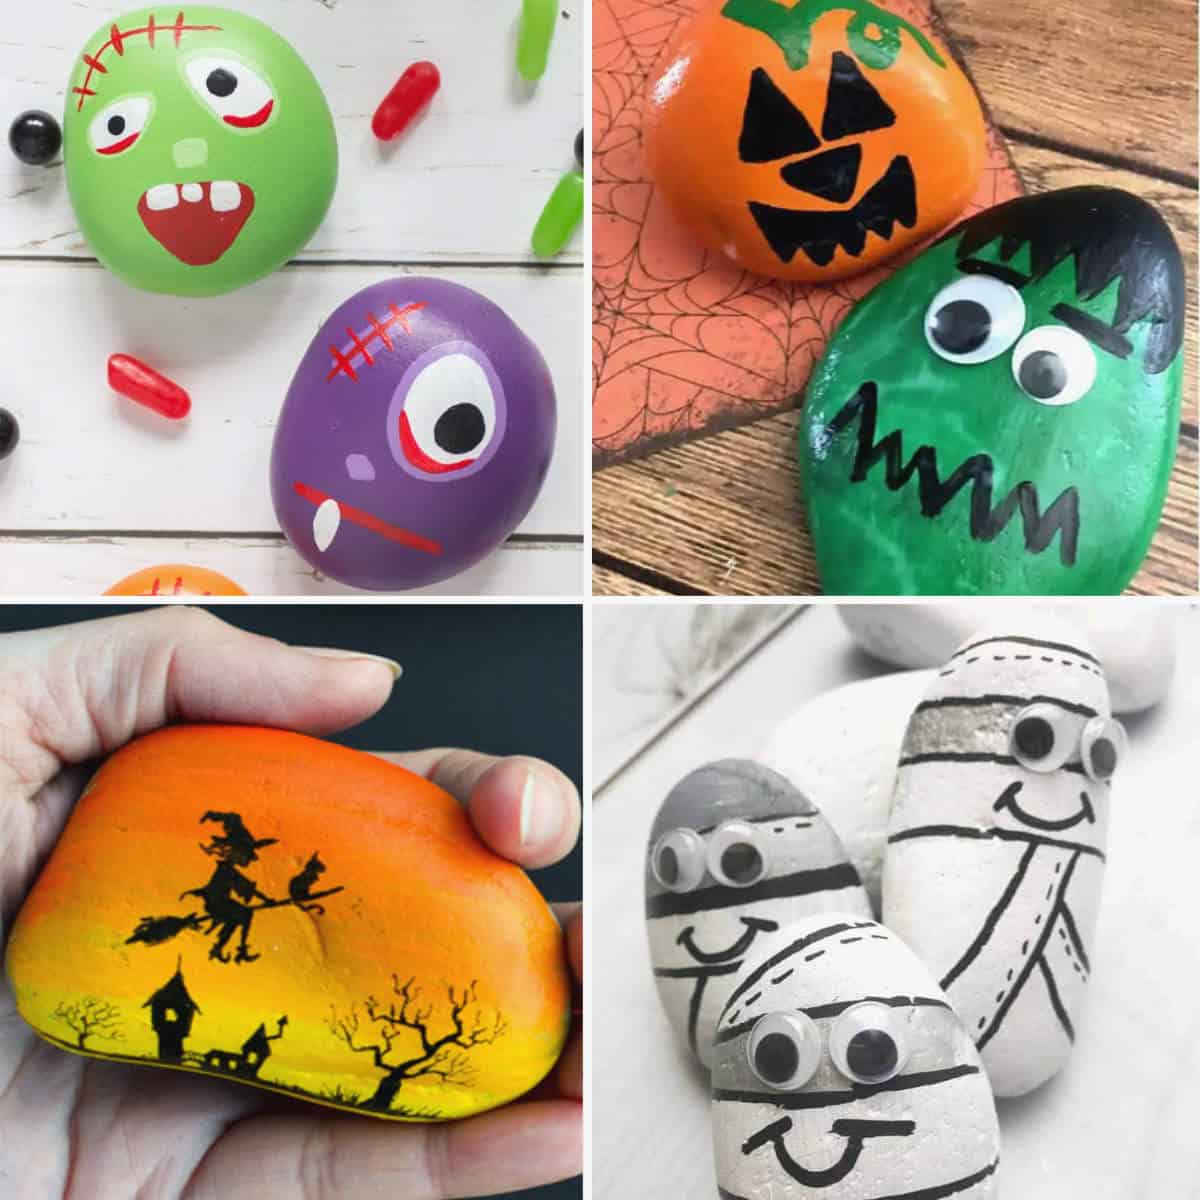 15 Halloween Rock Painting Ideas –With Tutorials!